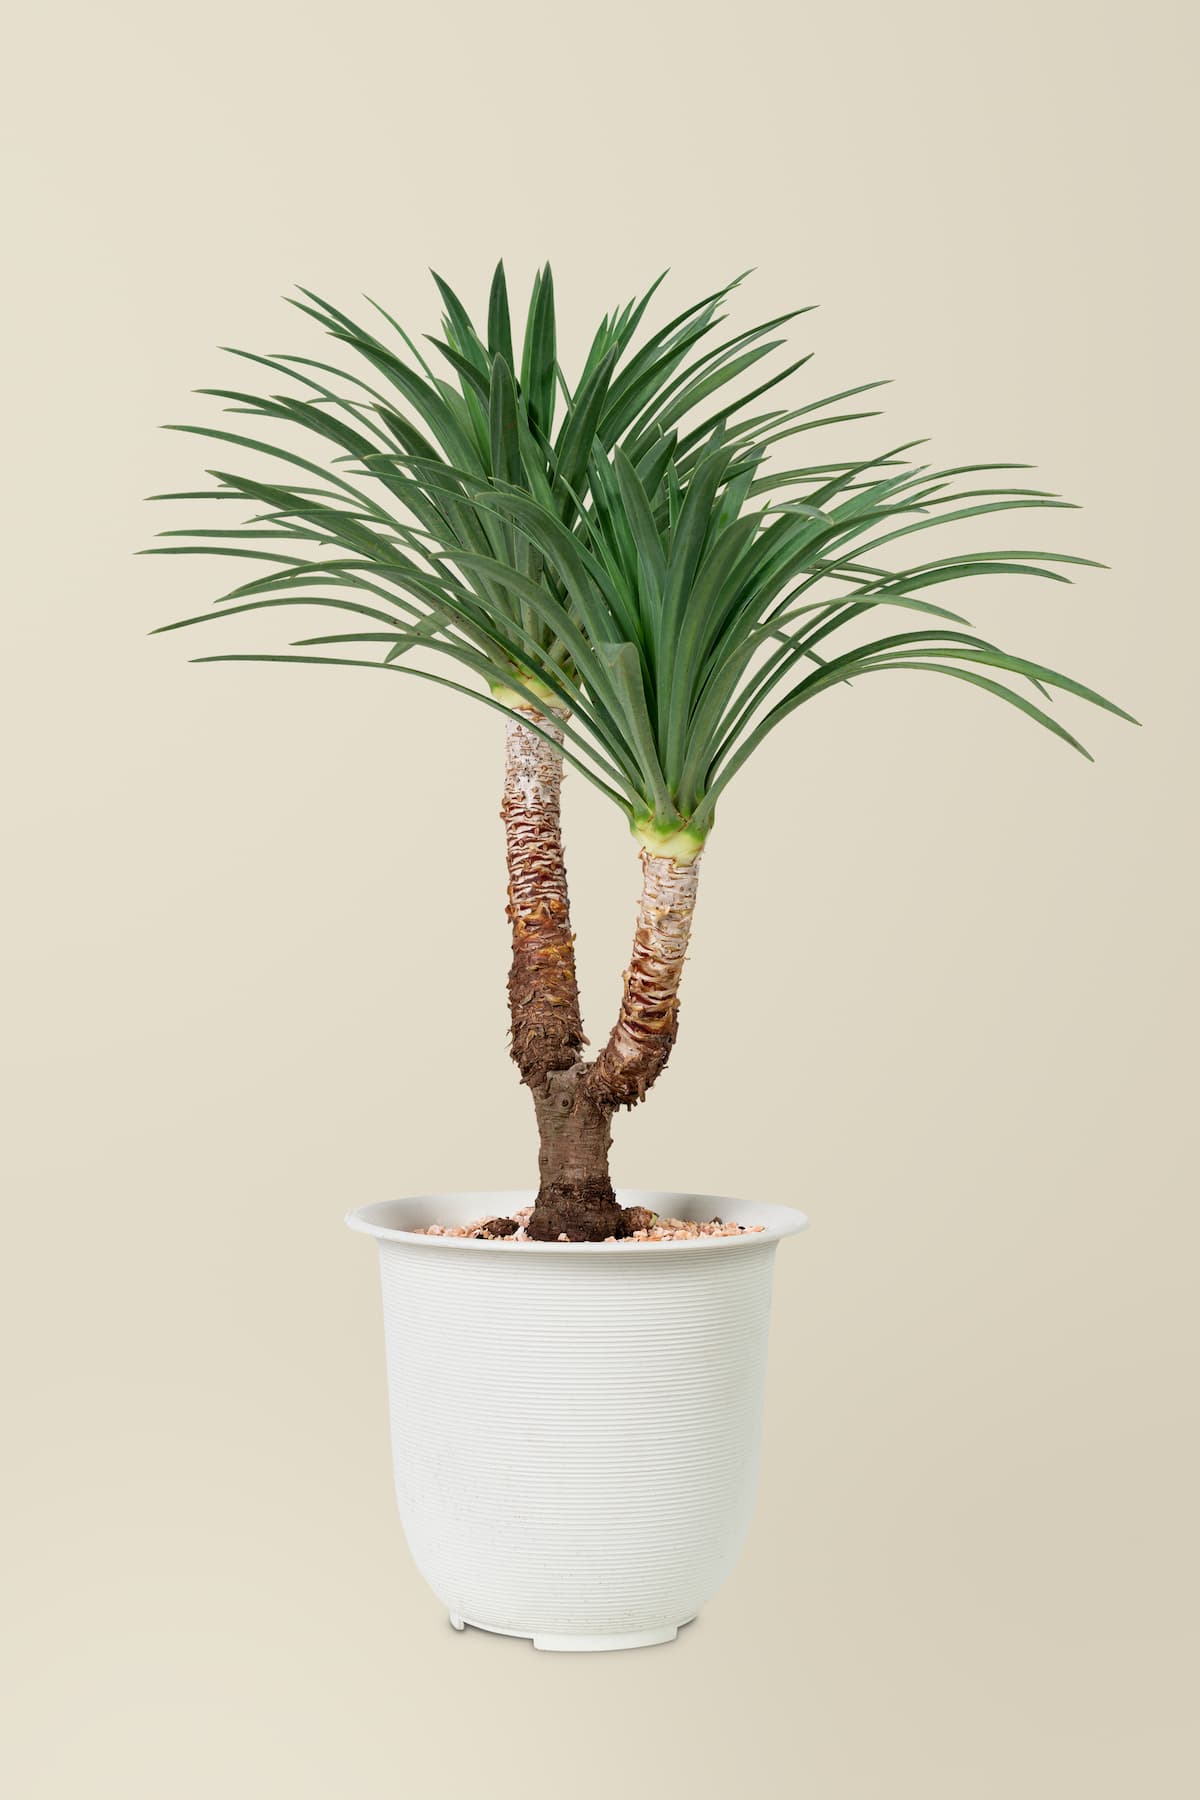 ponytail palm at kuyrugu palmiyesi1 2